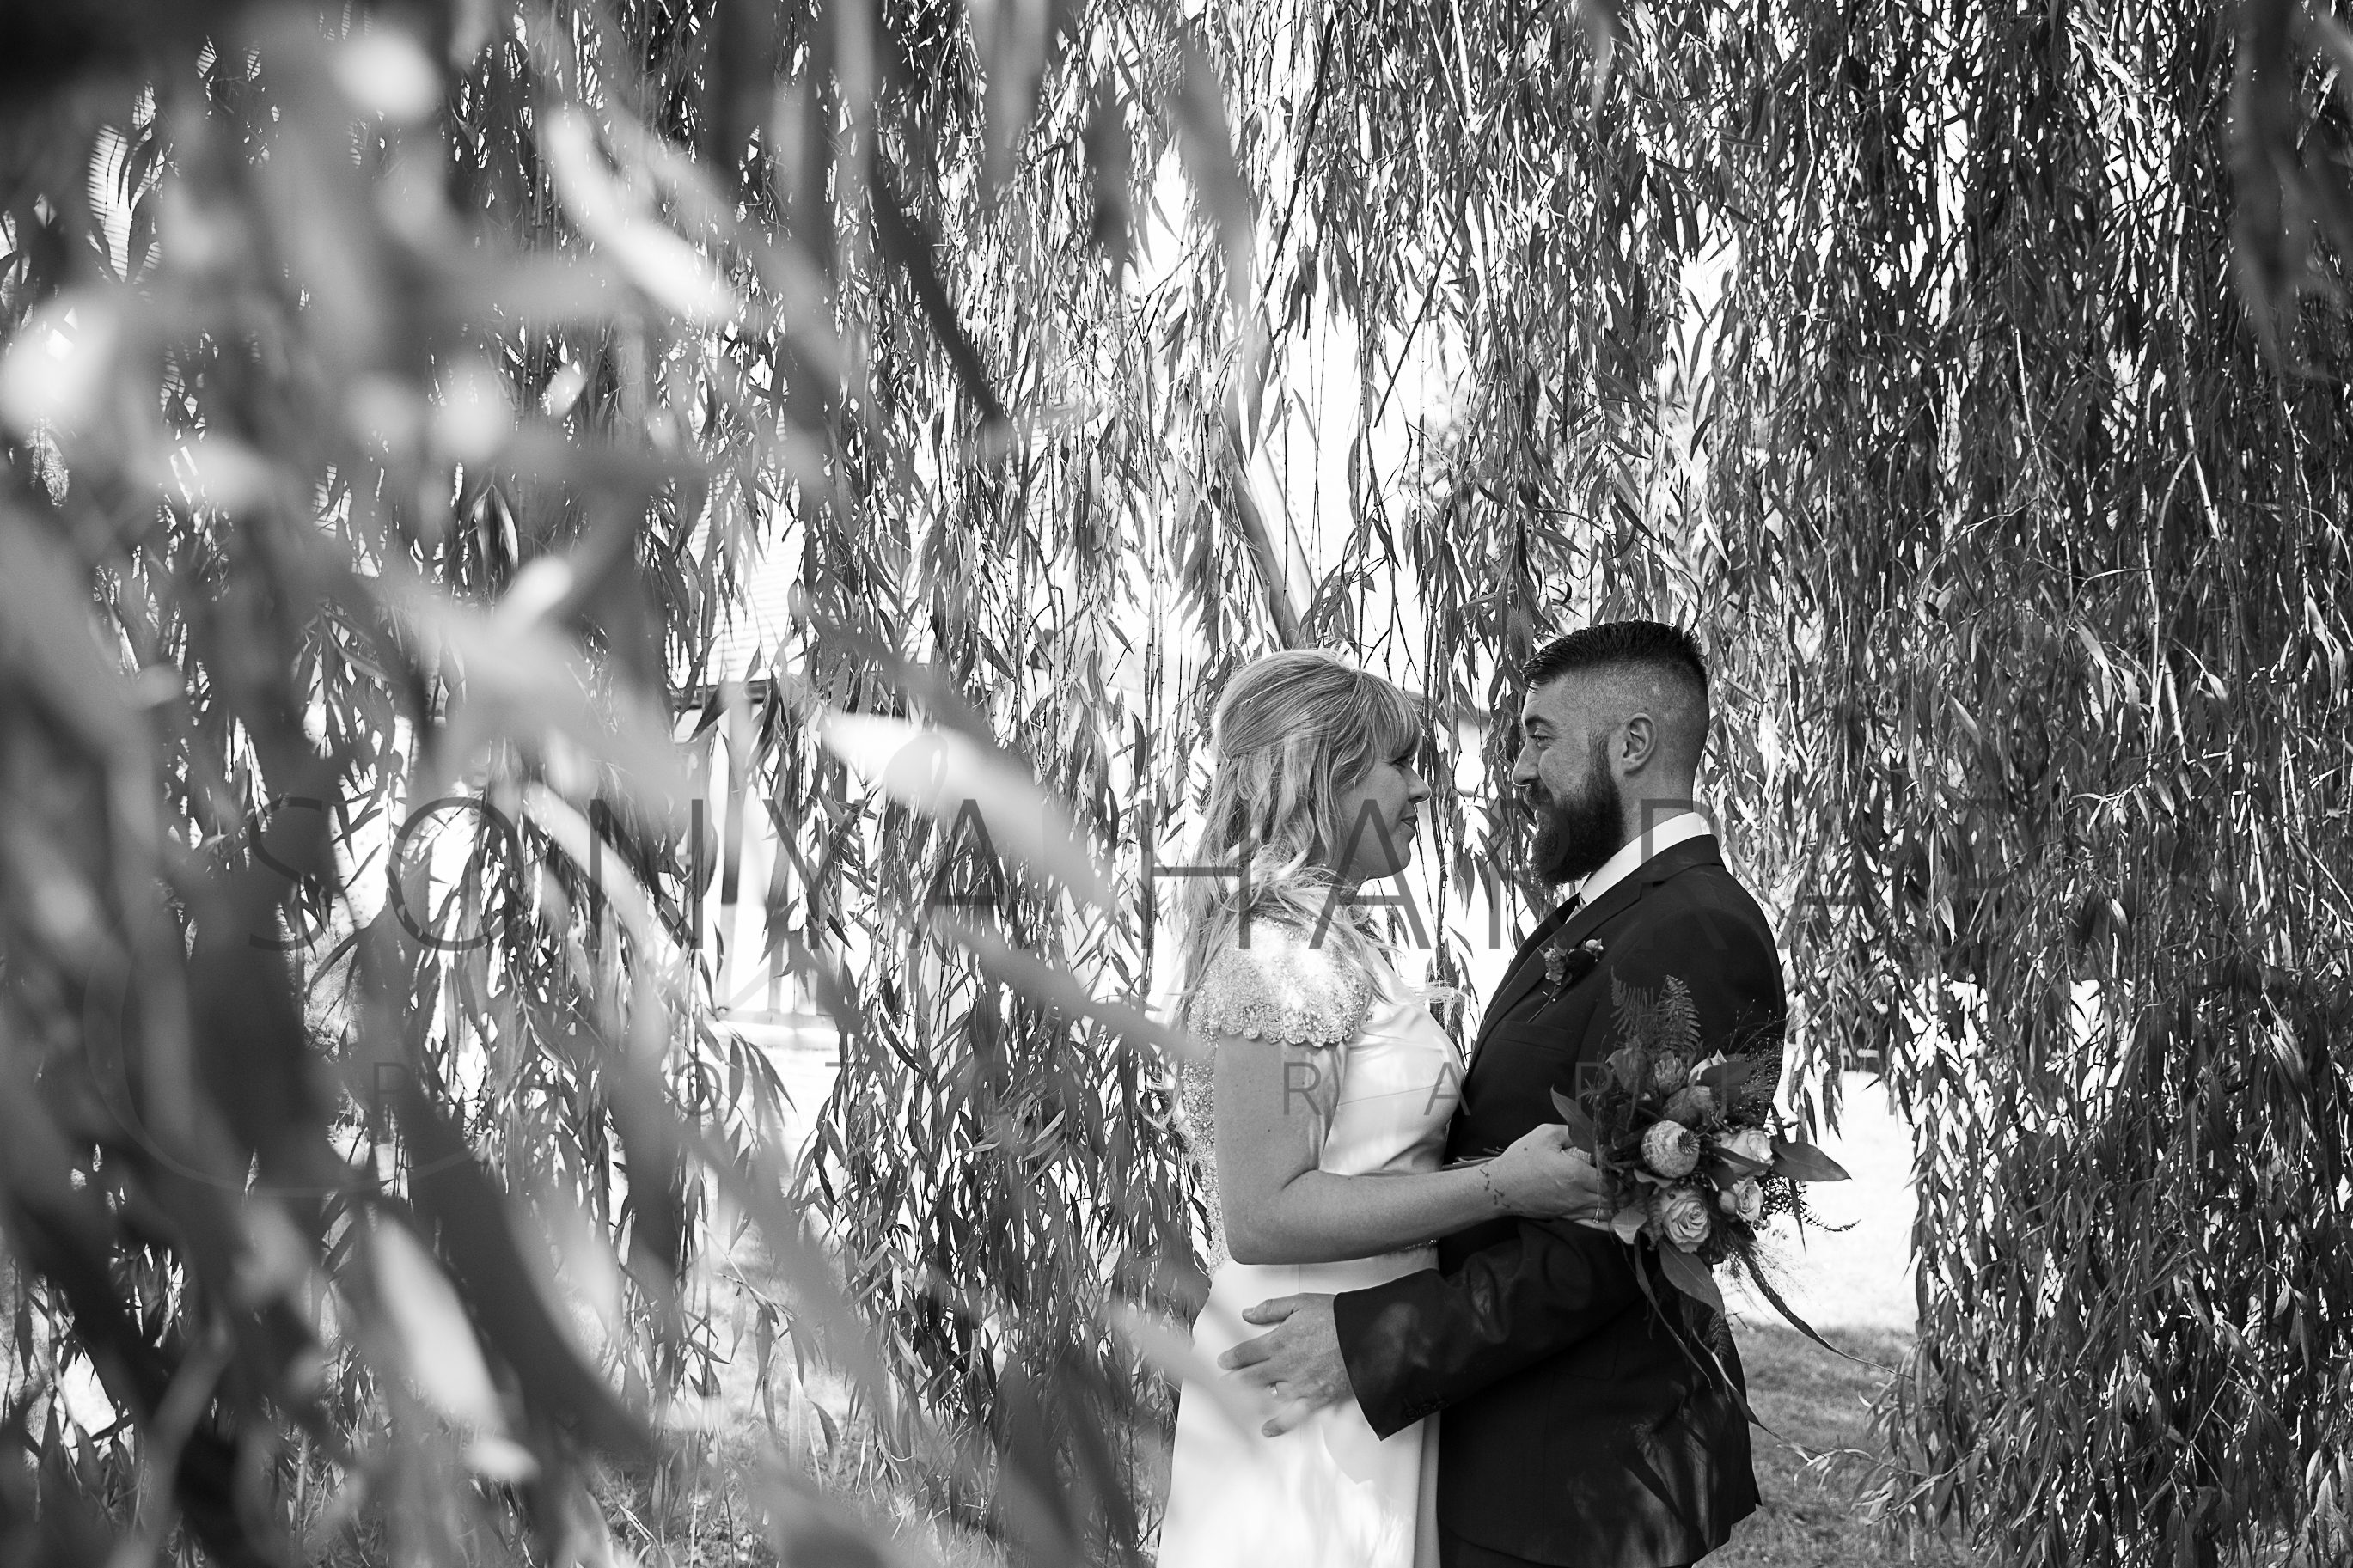 Tewinbury farm hotel wedding photograph of bride and groom by Sonya Harrap photographer under willow